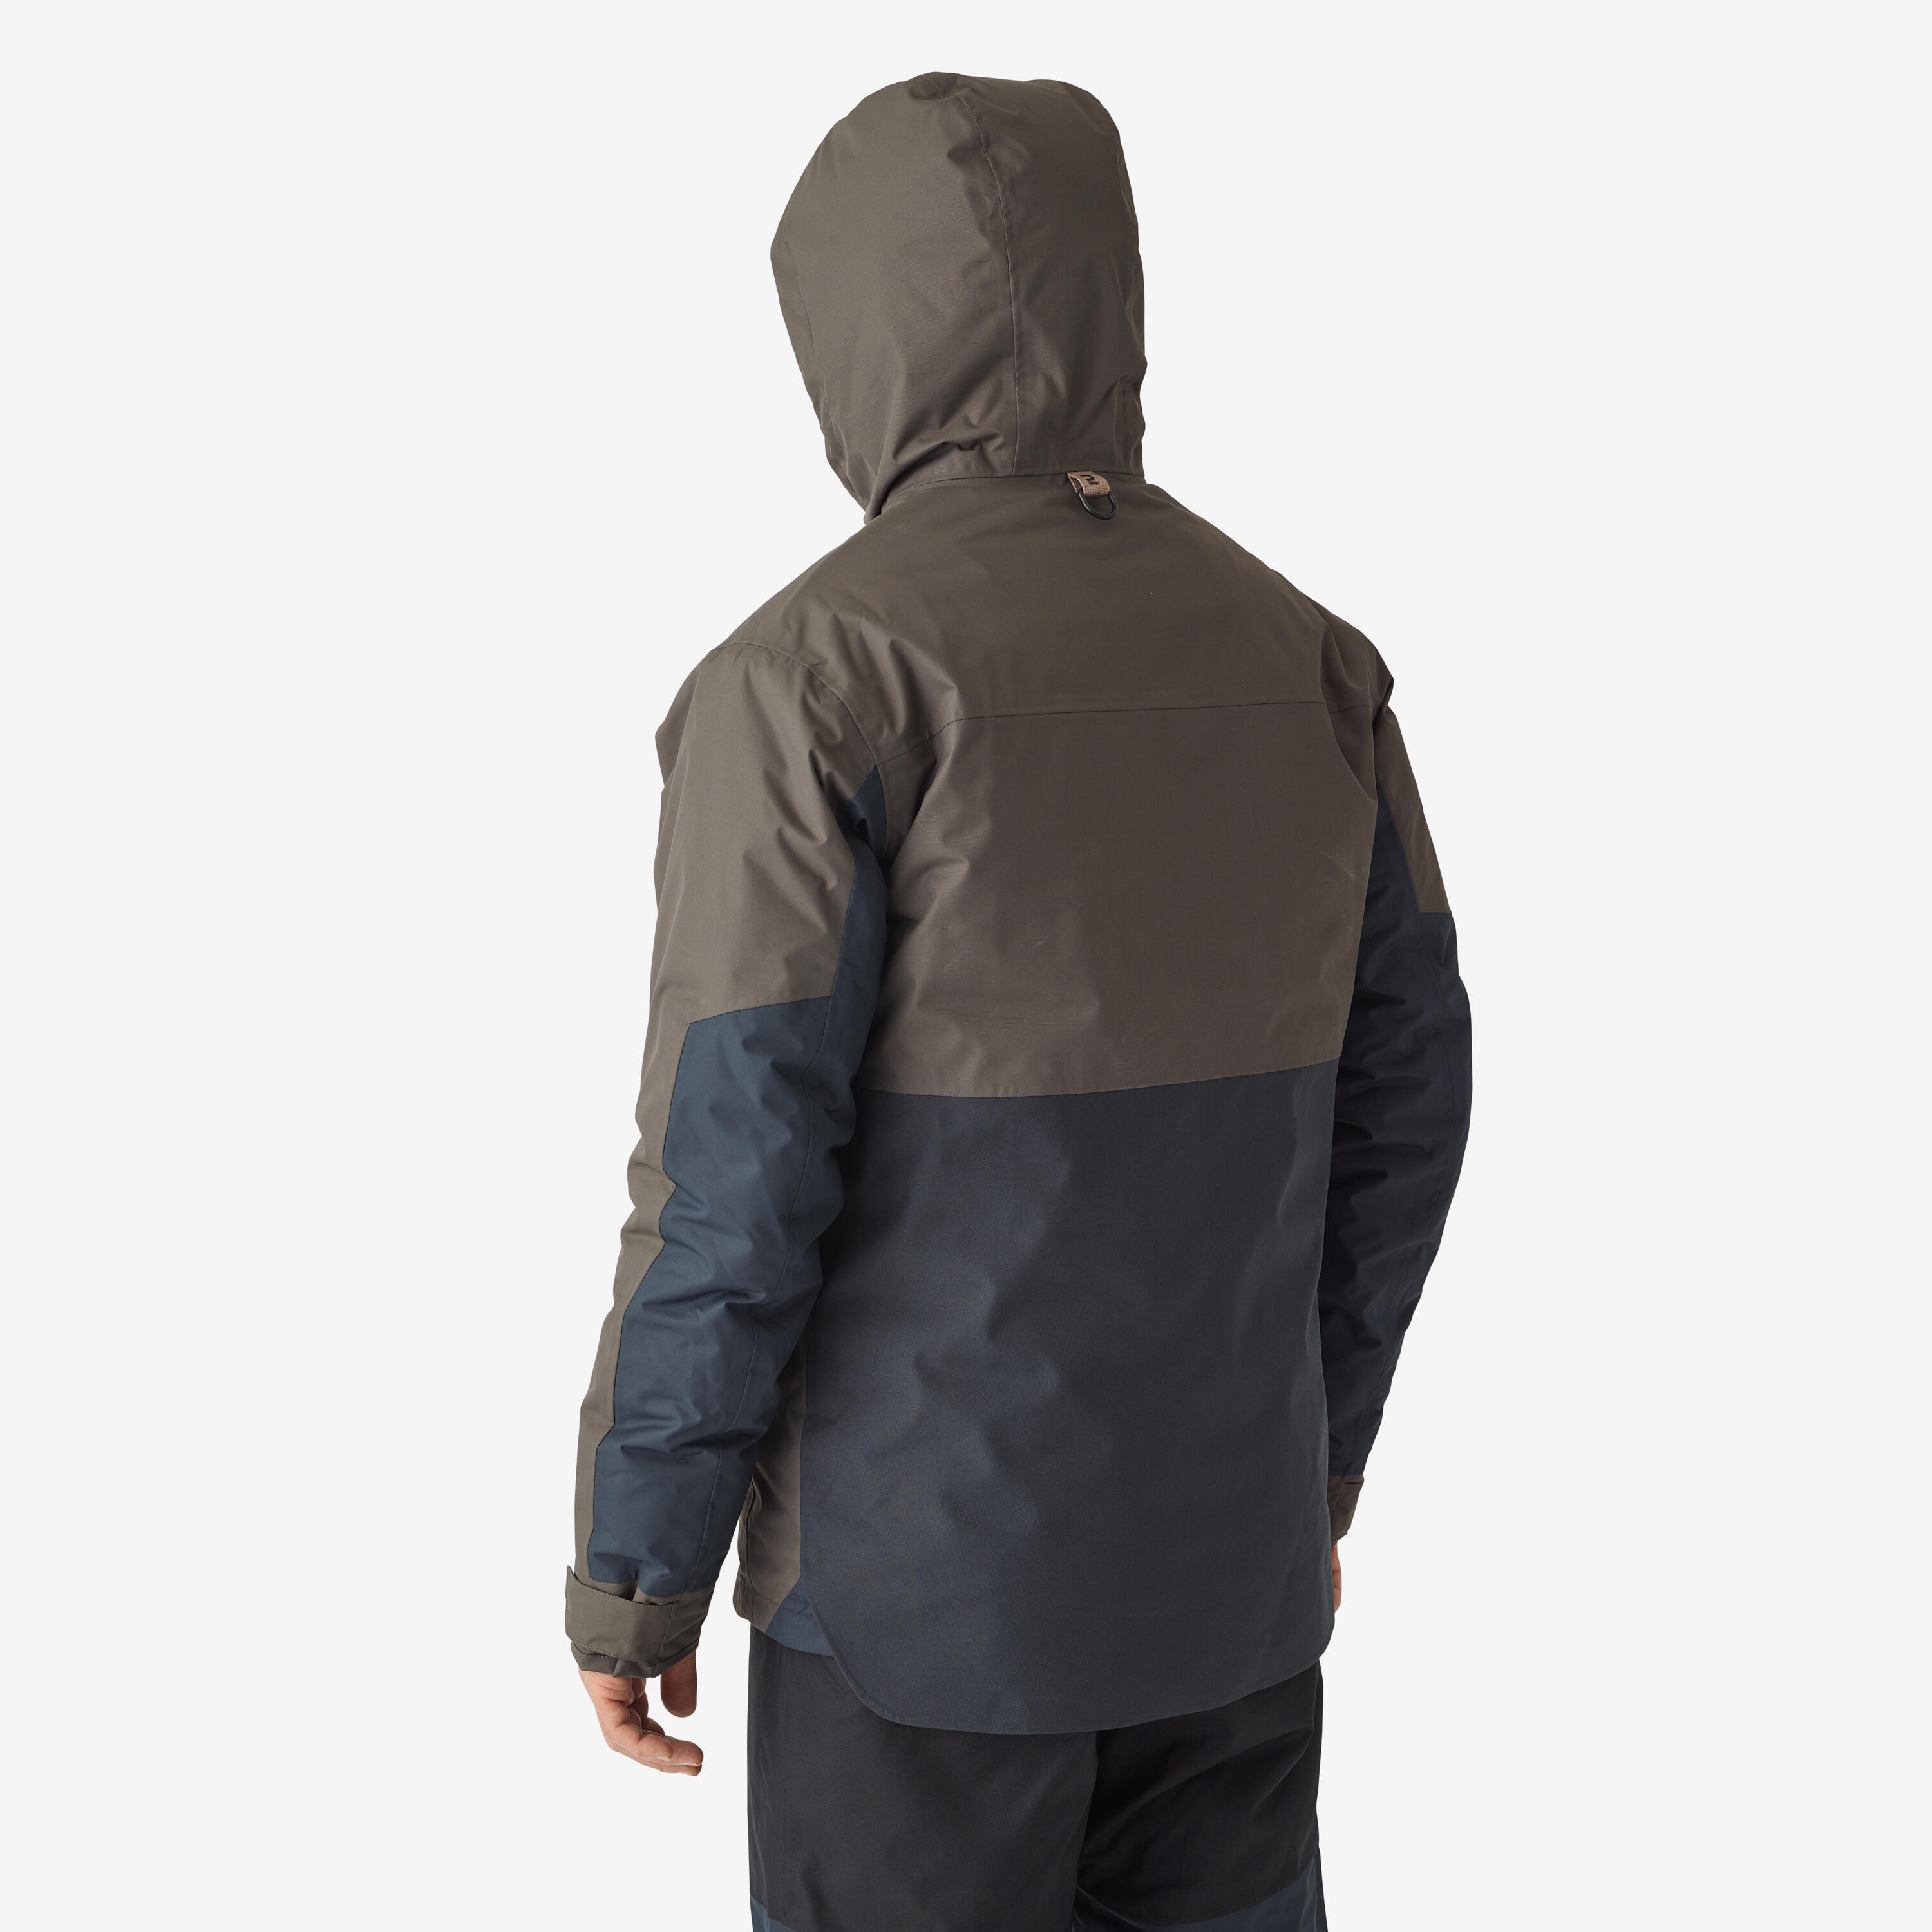 Men's warm waterproof fishing jacket - FJ 500 TH khaki 2/11